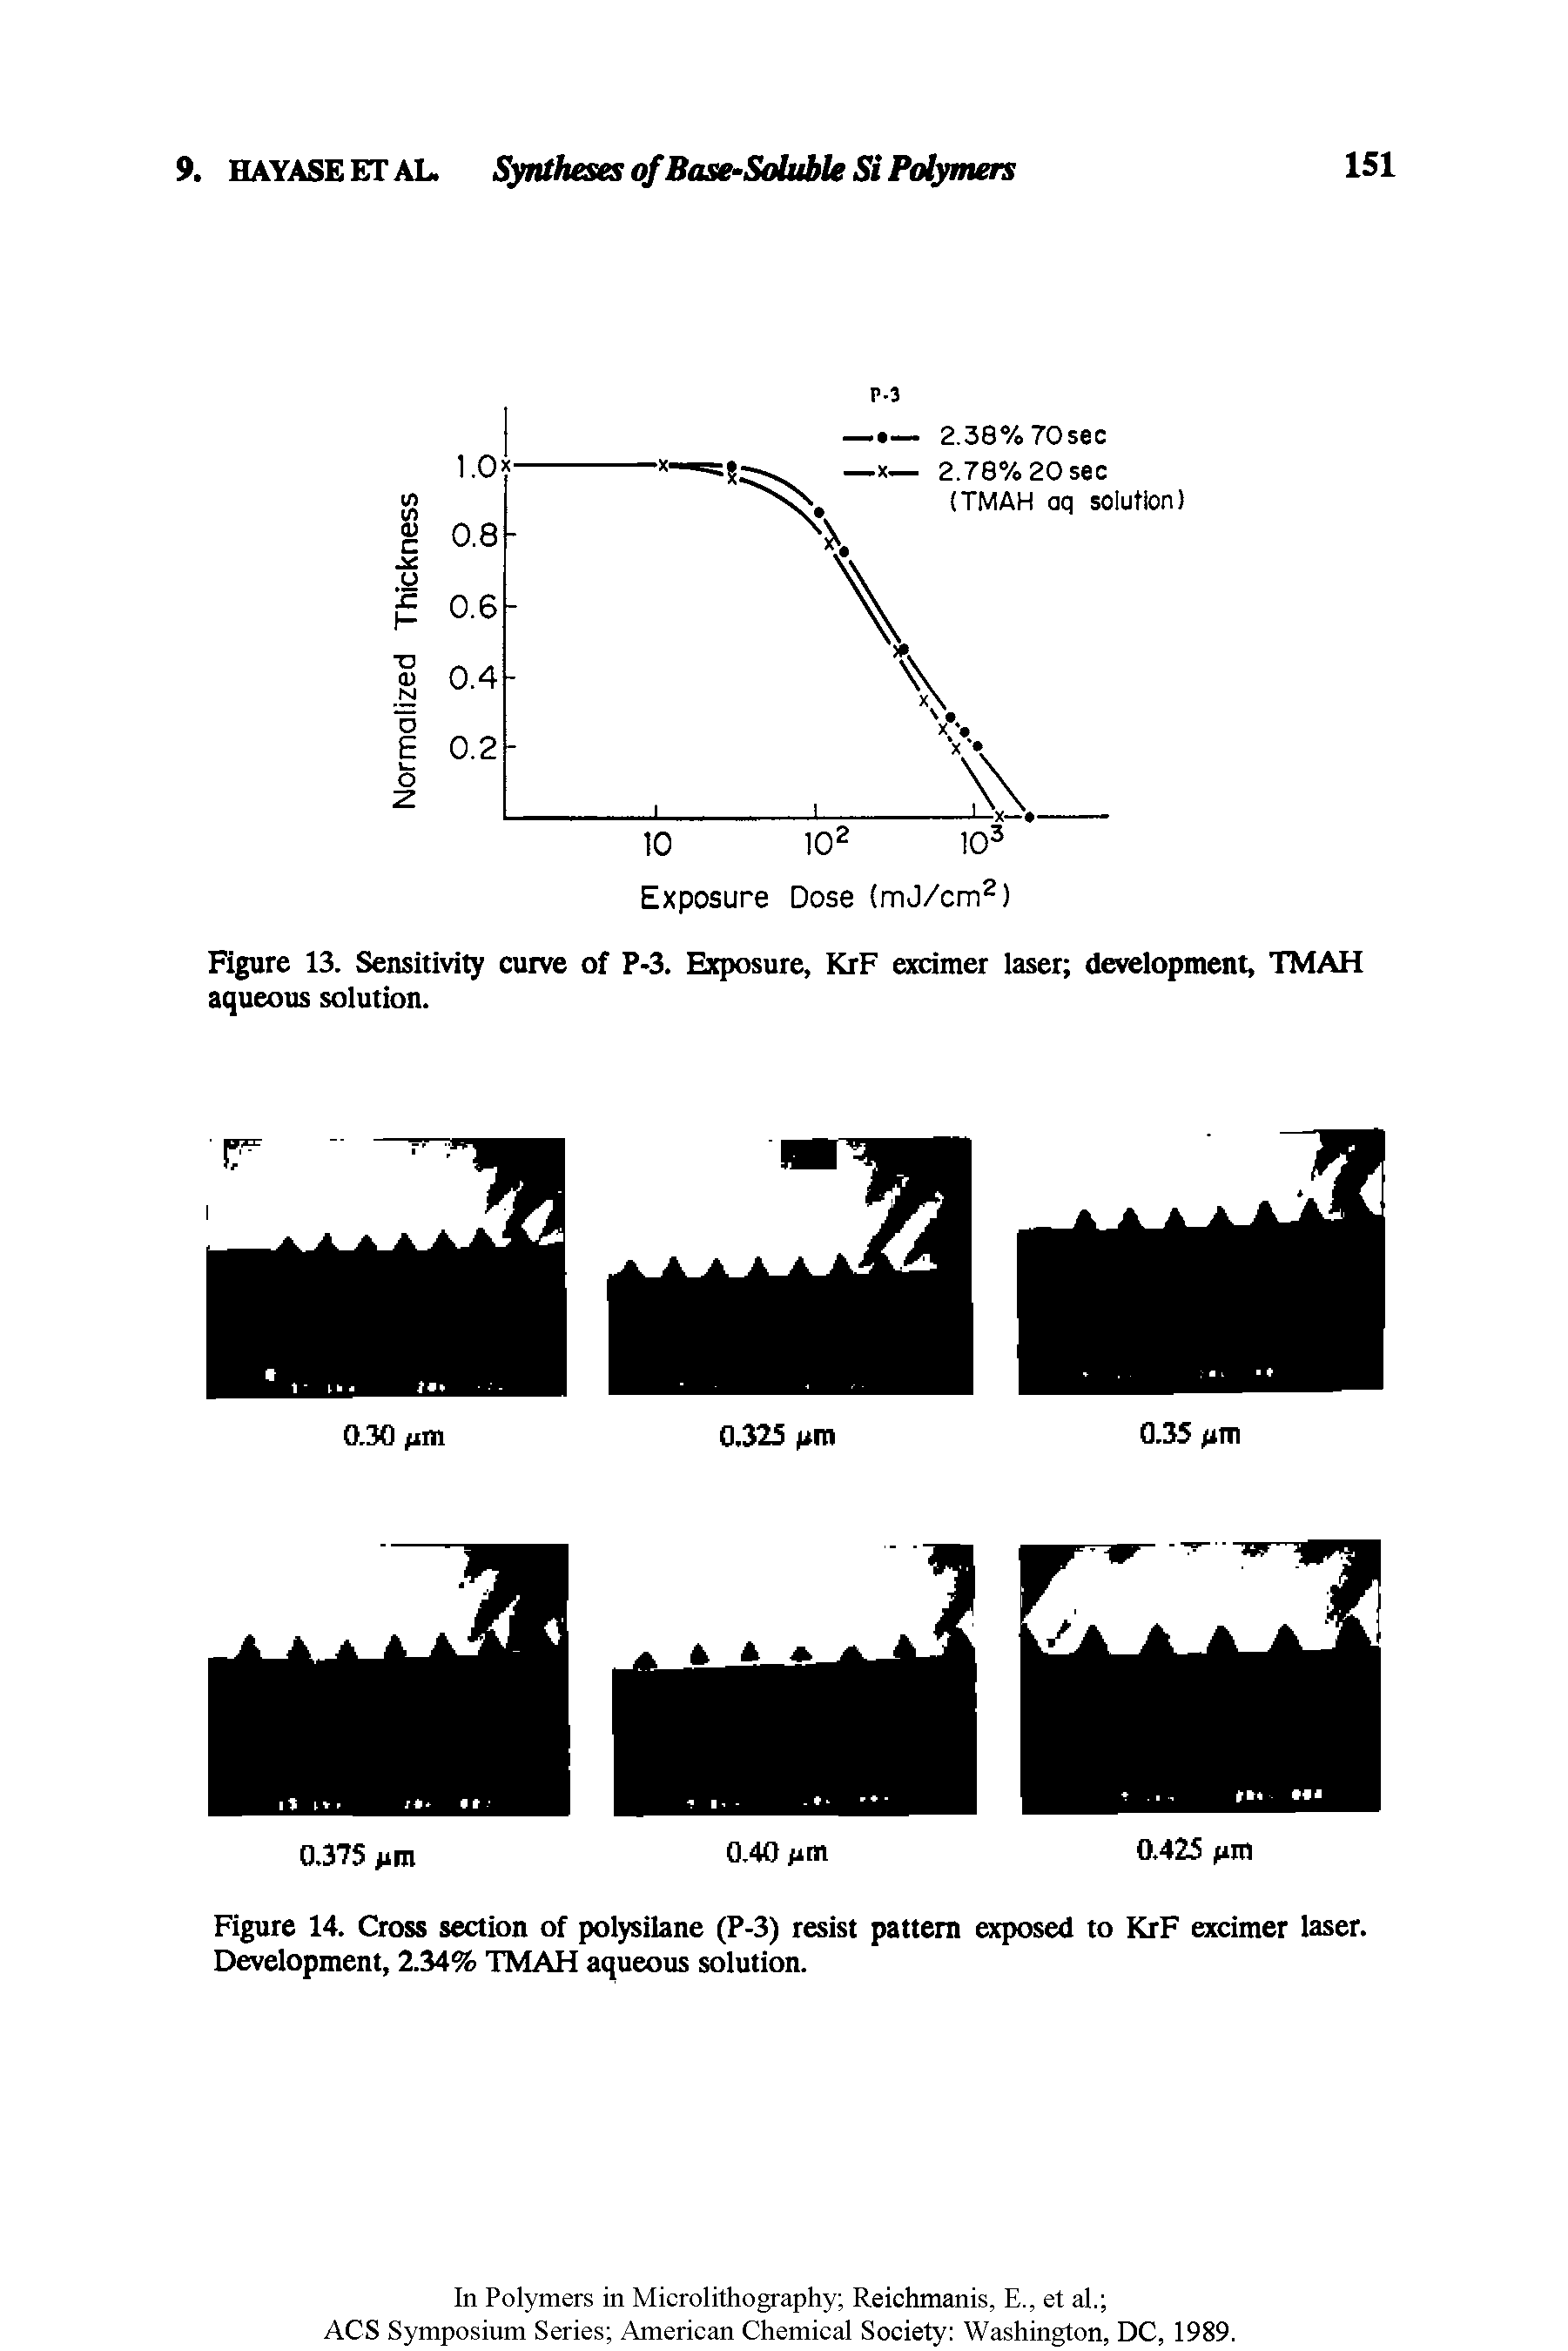 Figure 13. Sensitivity curve of P-3. Exposure, KrF excimer laser development, TMAH aqueous solution.